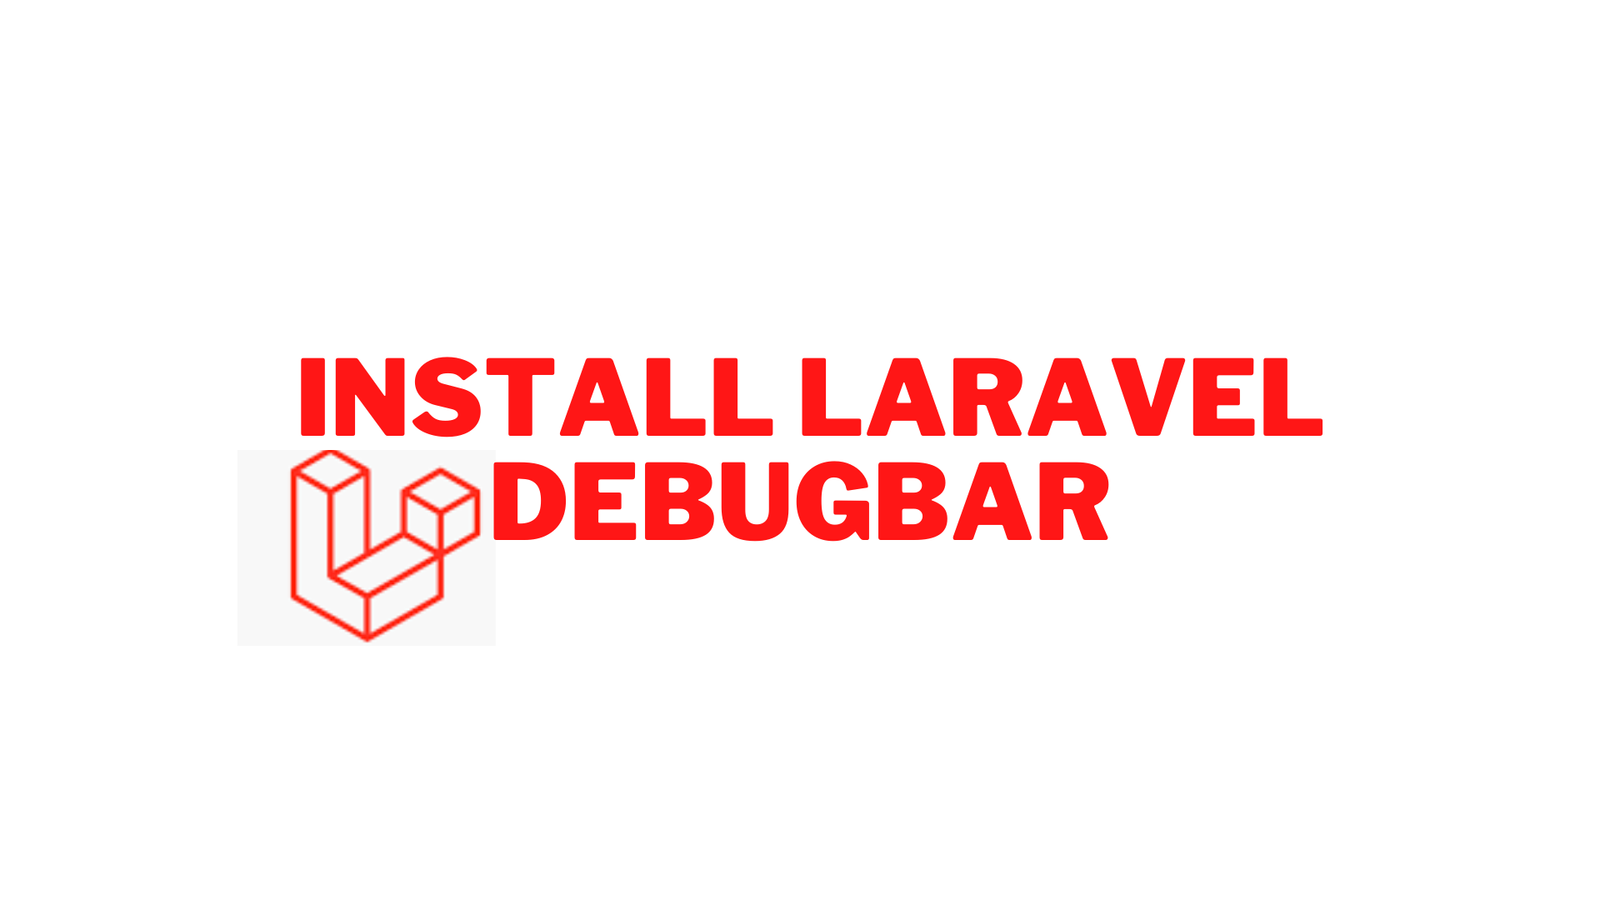 How to Install Laravel Debugbar